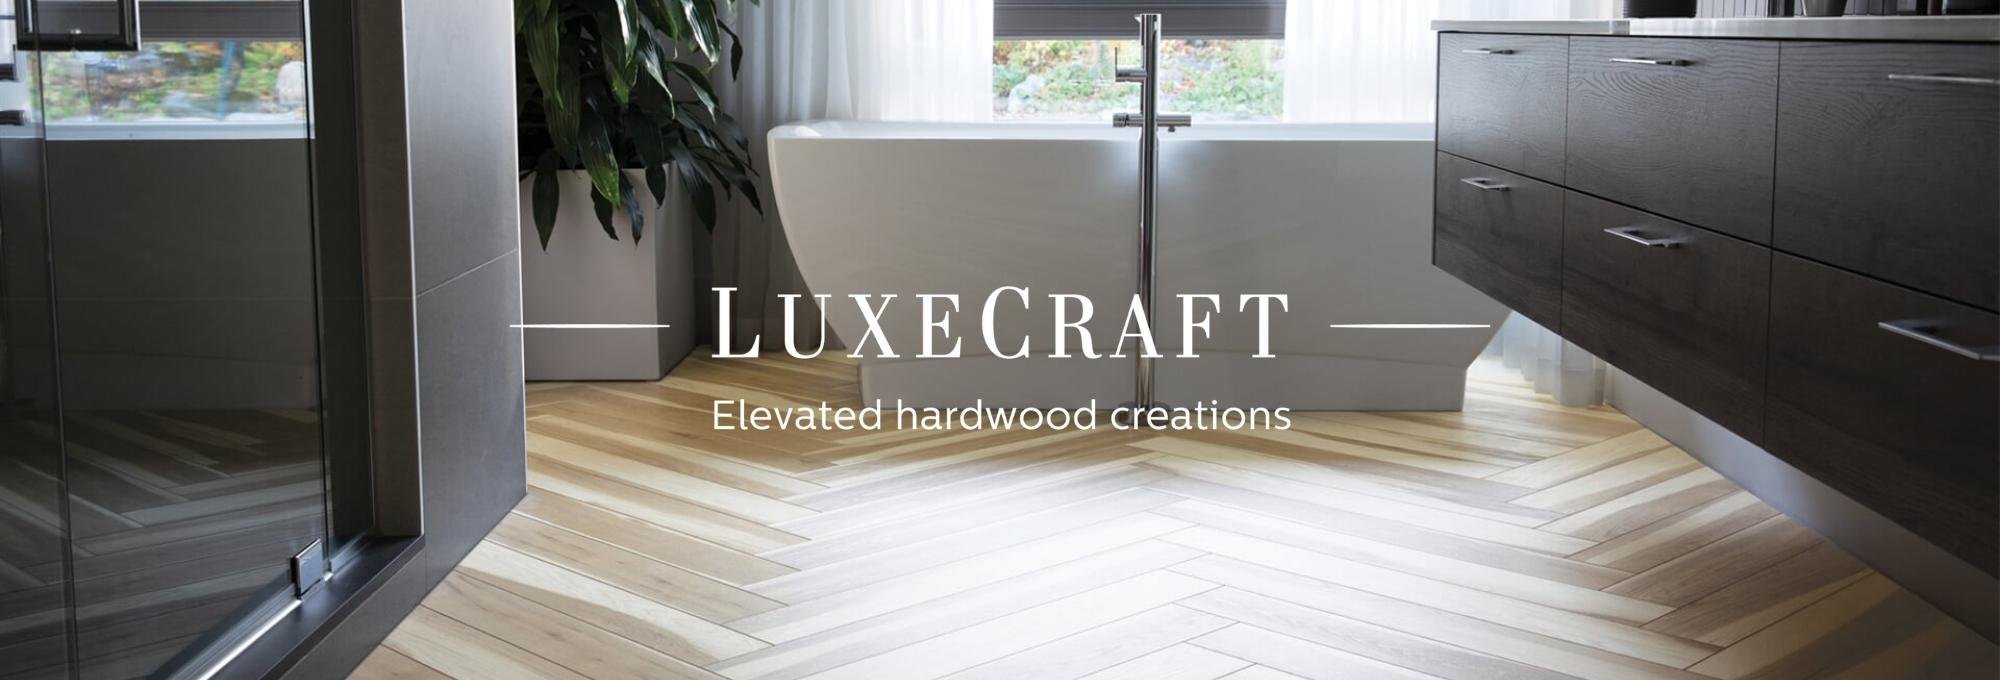 Karastan LuxeCraft - Elevated Hardwood Creations